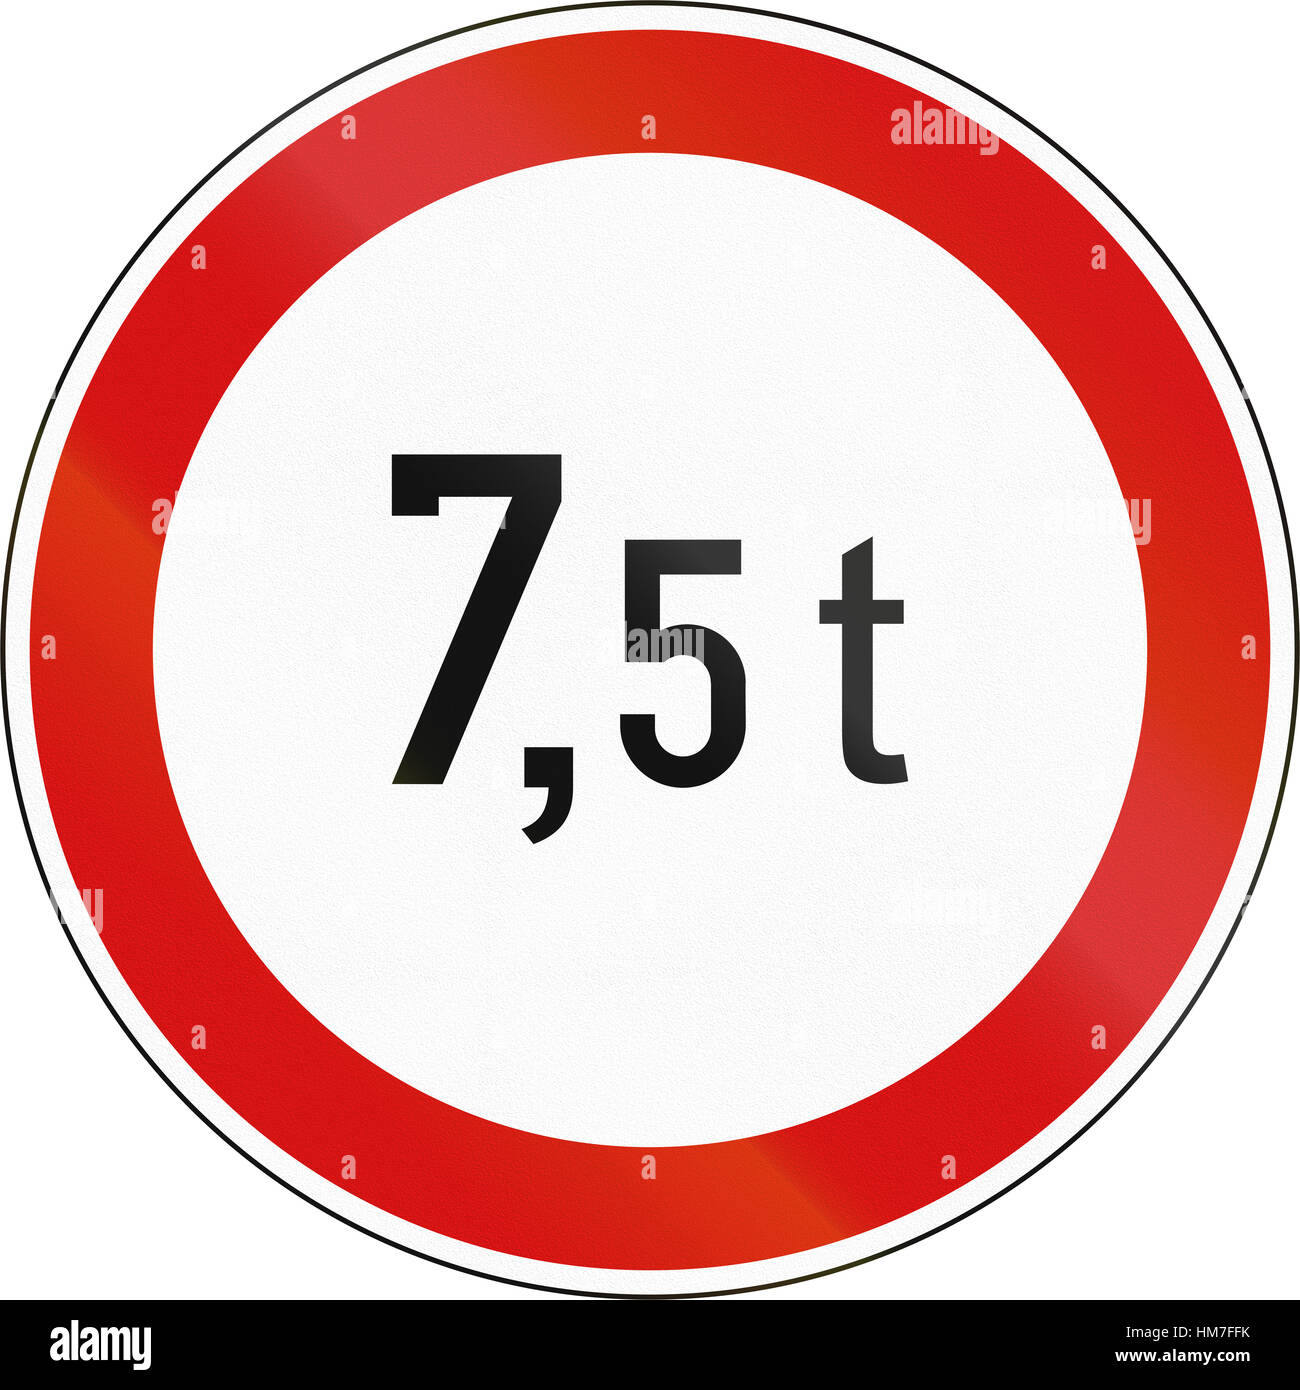 Slovenian regulatory road sign - No vehicles over 7.5 tons. Stock Photo